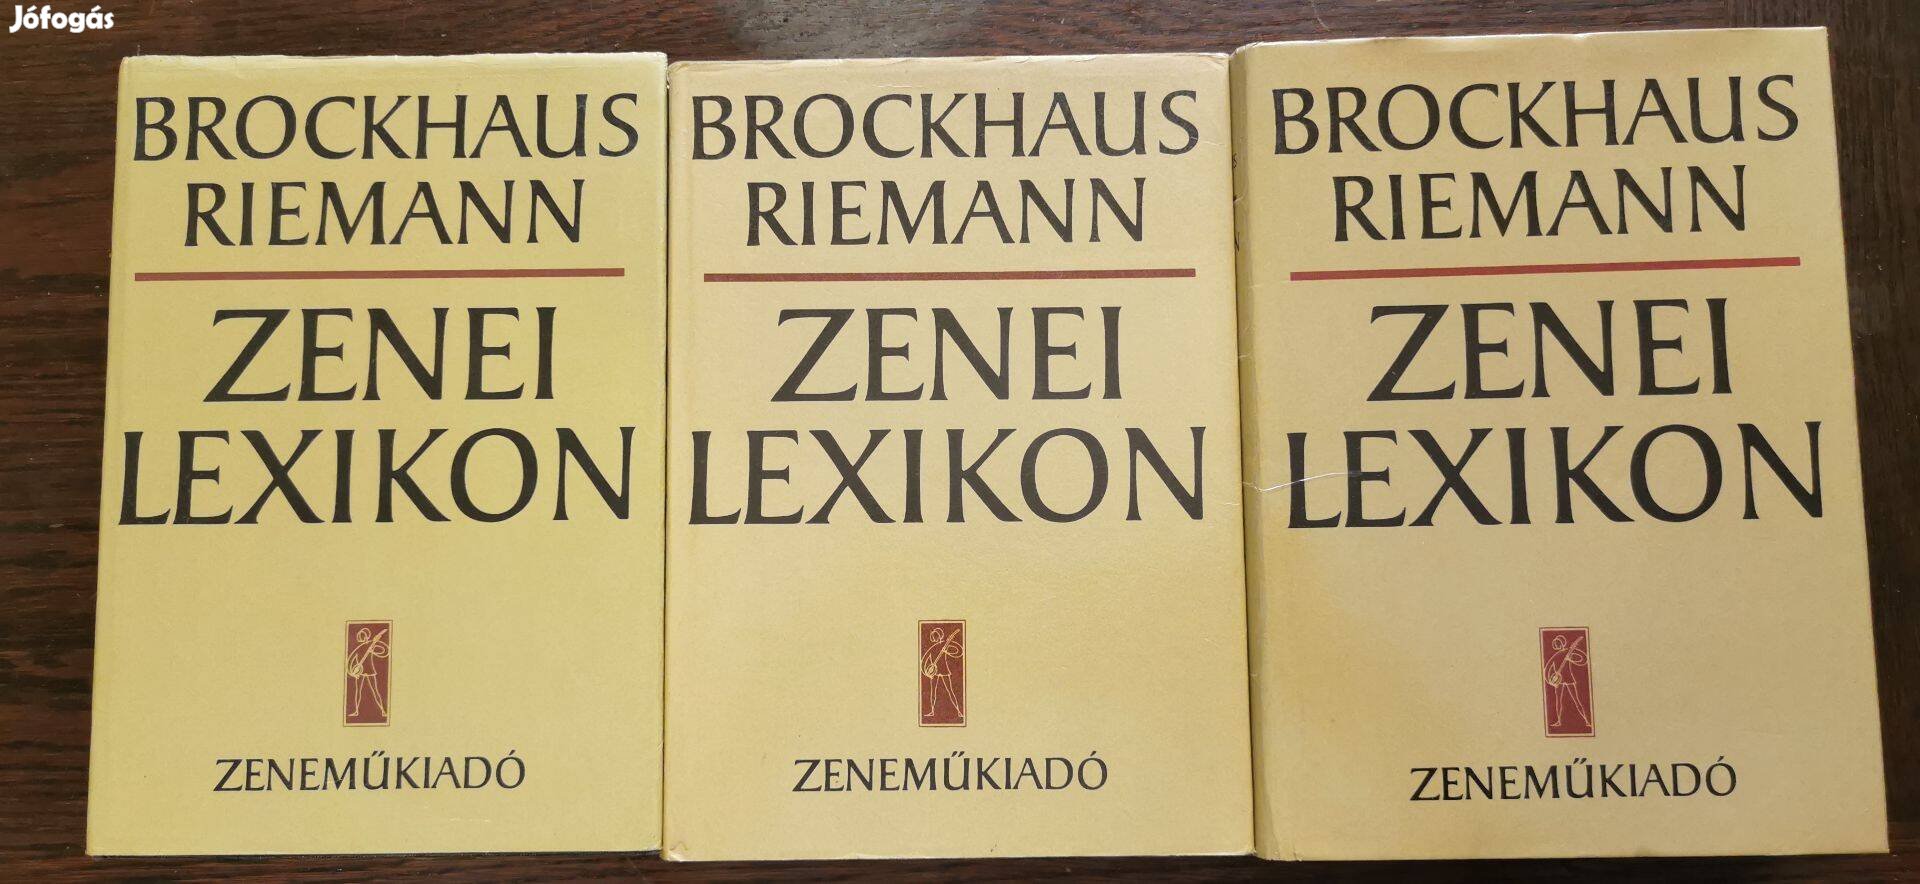 Brockhaus, Riemann - Zenei Lexikon I-II-III